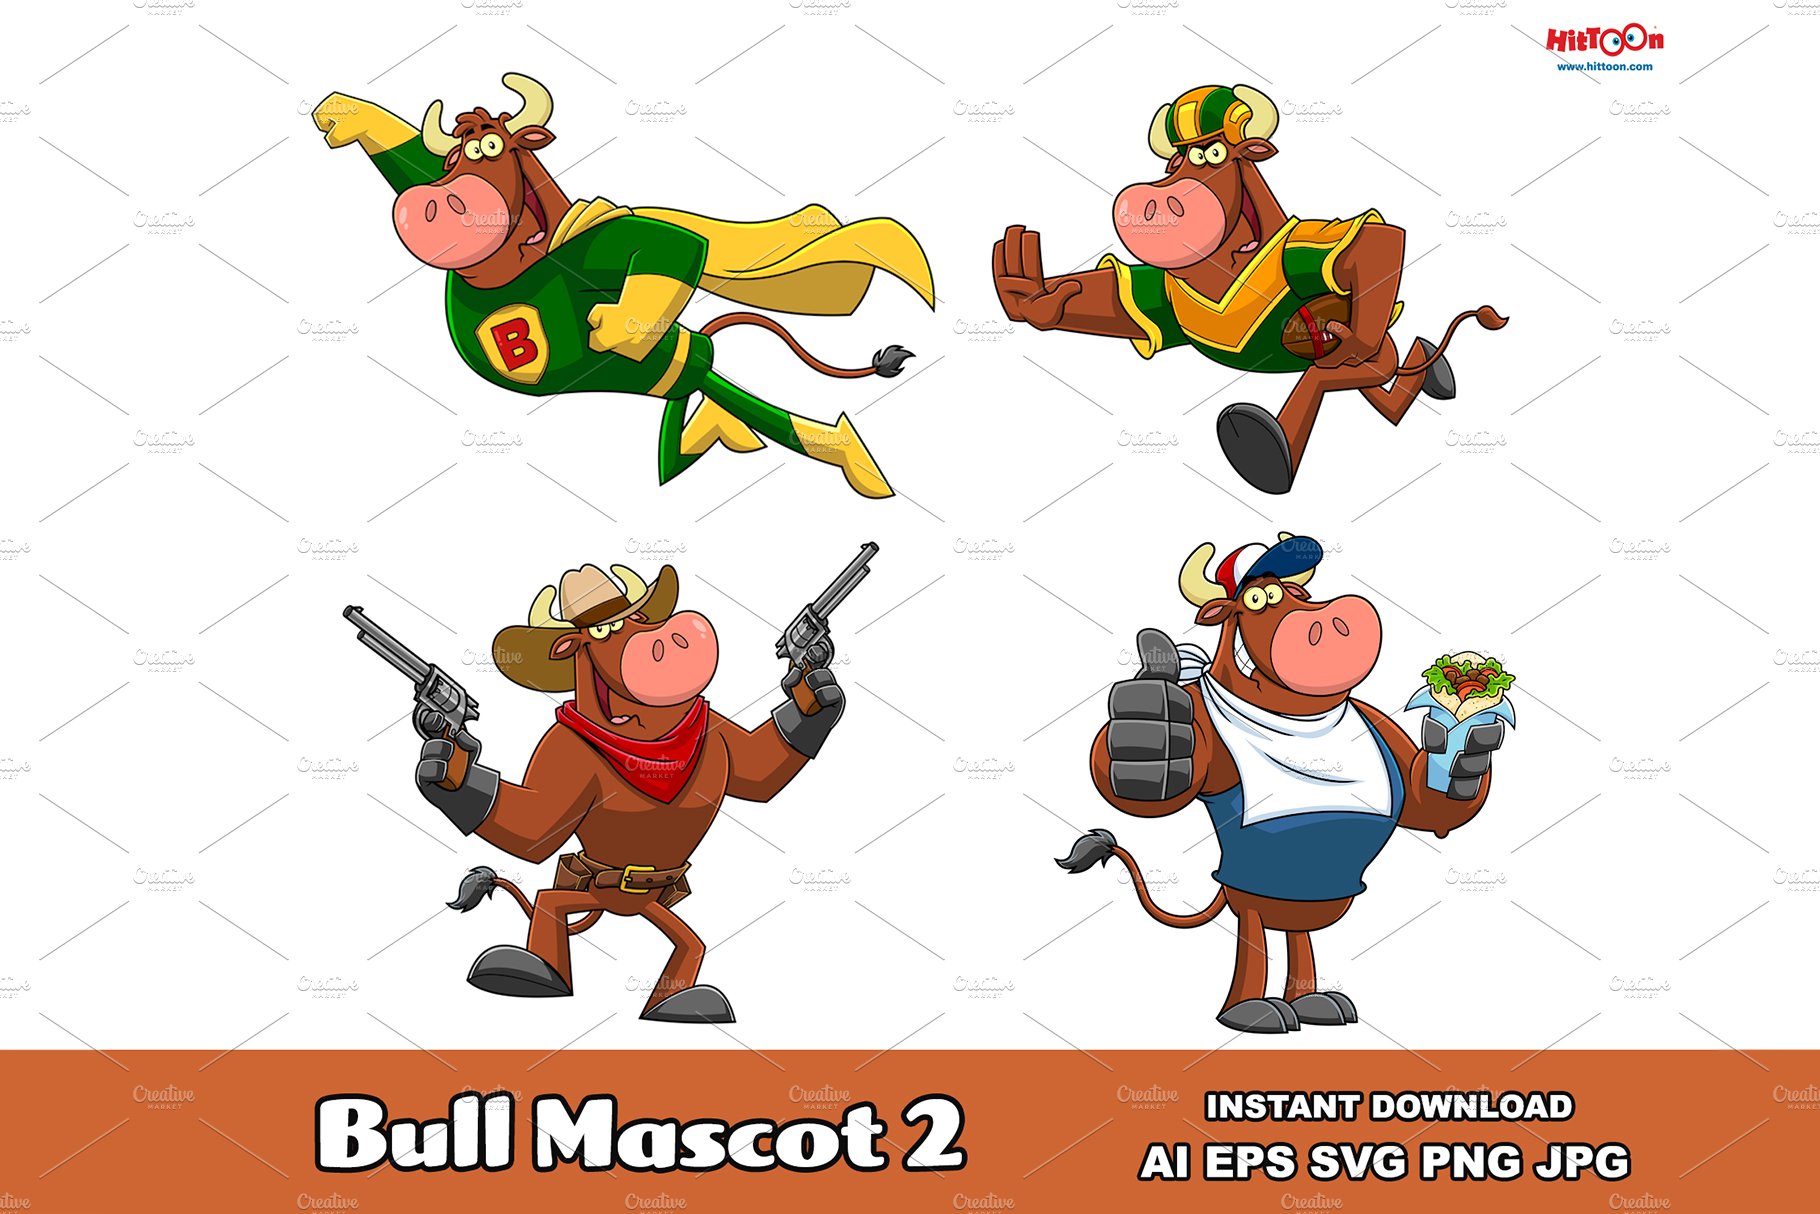 Bull Cartoon Mascot Character 2 cover image.